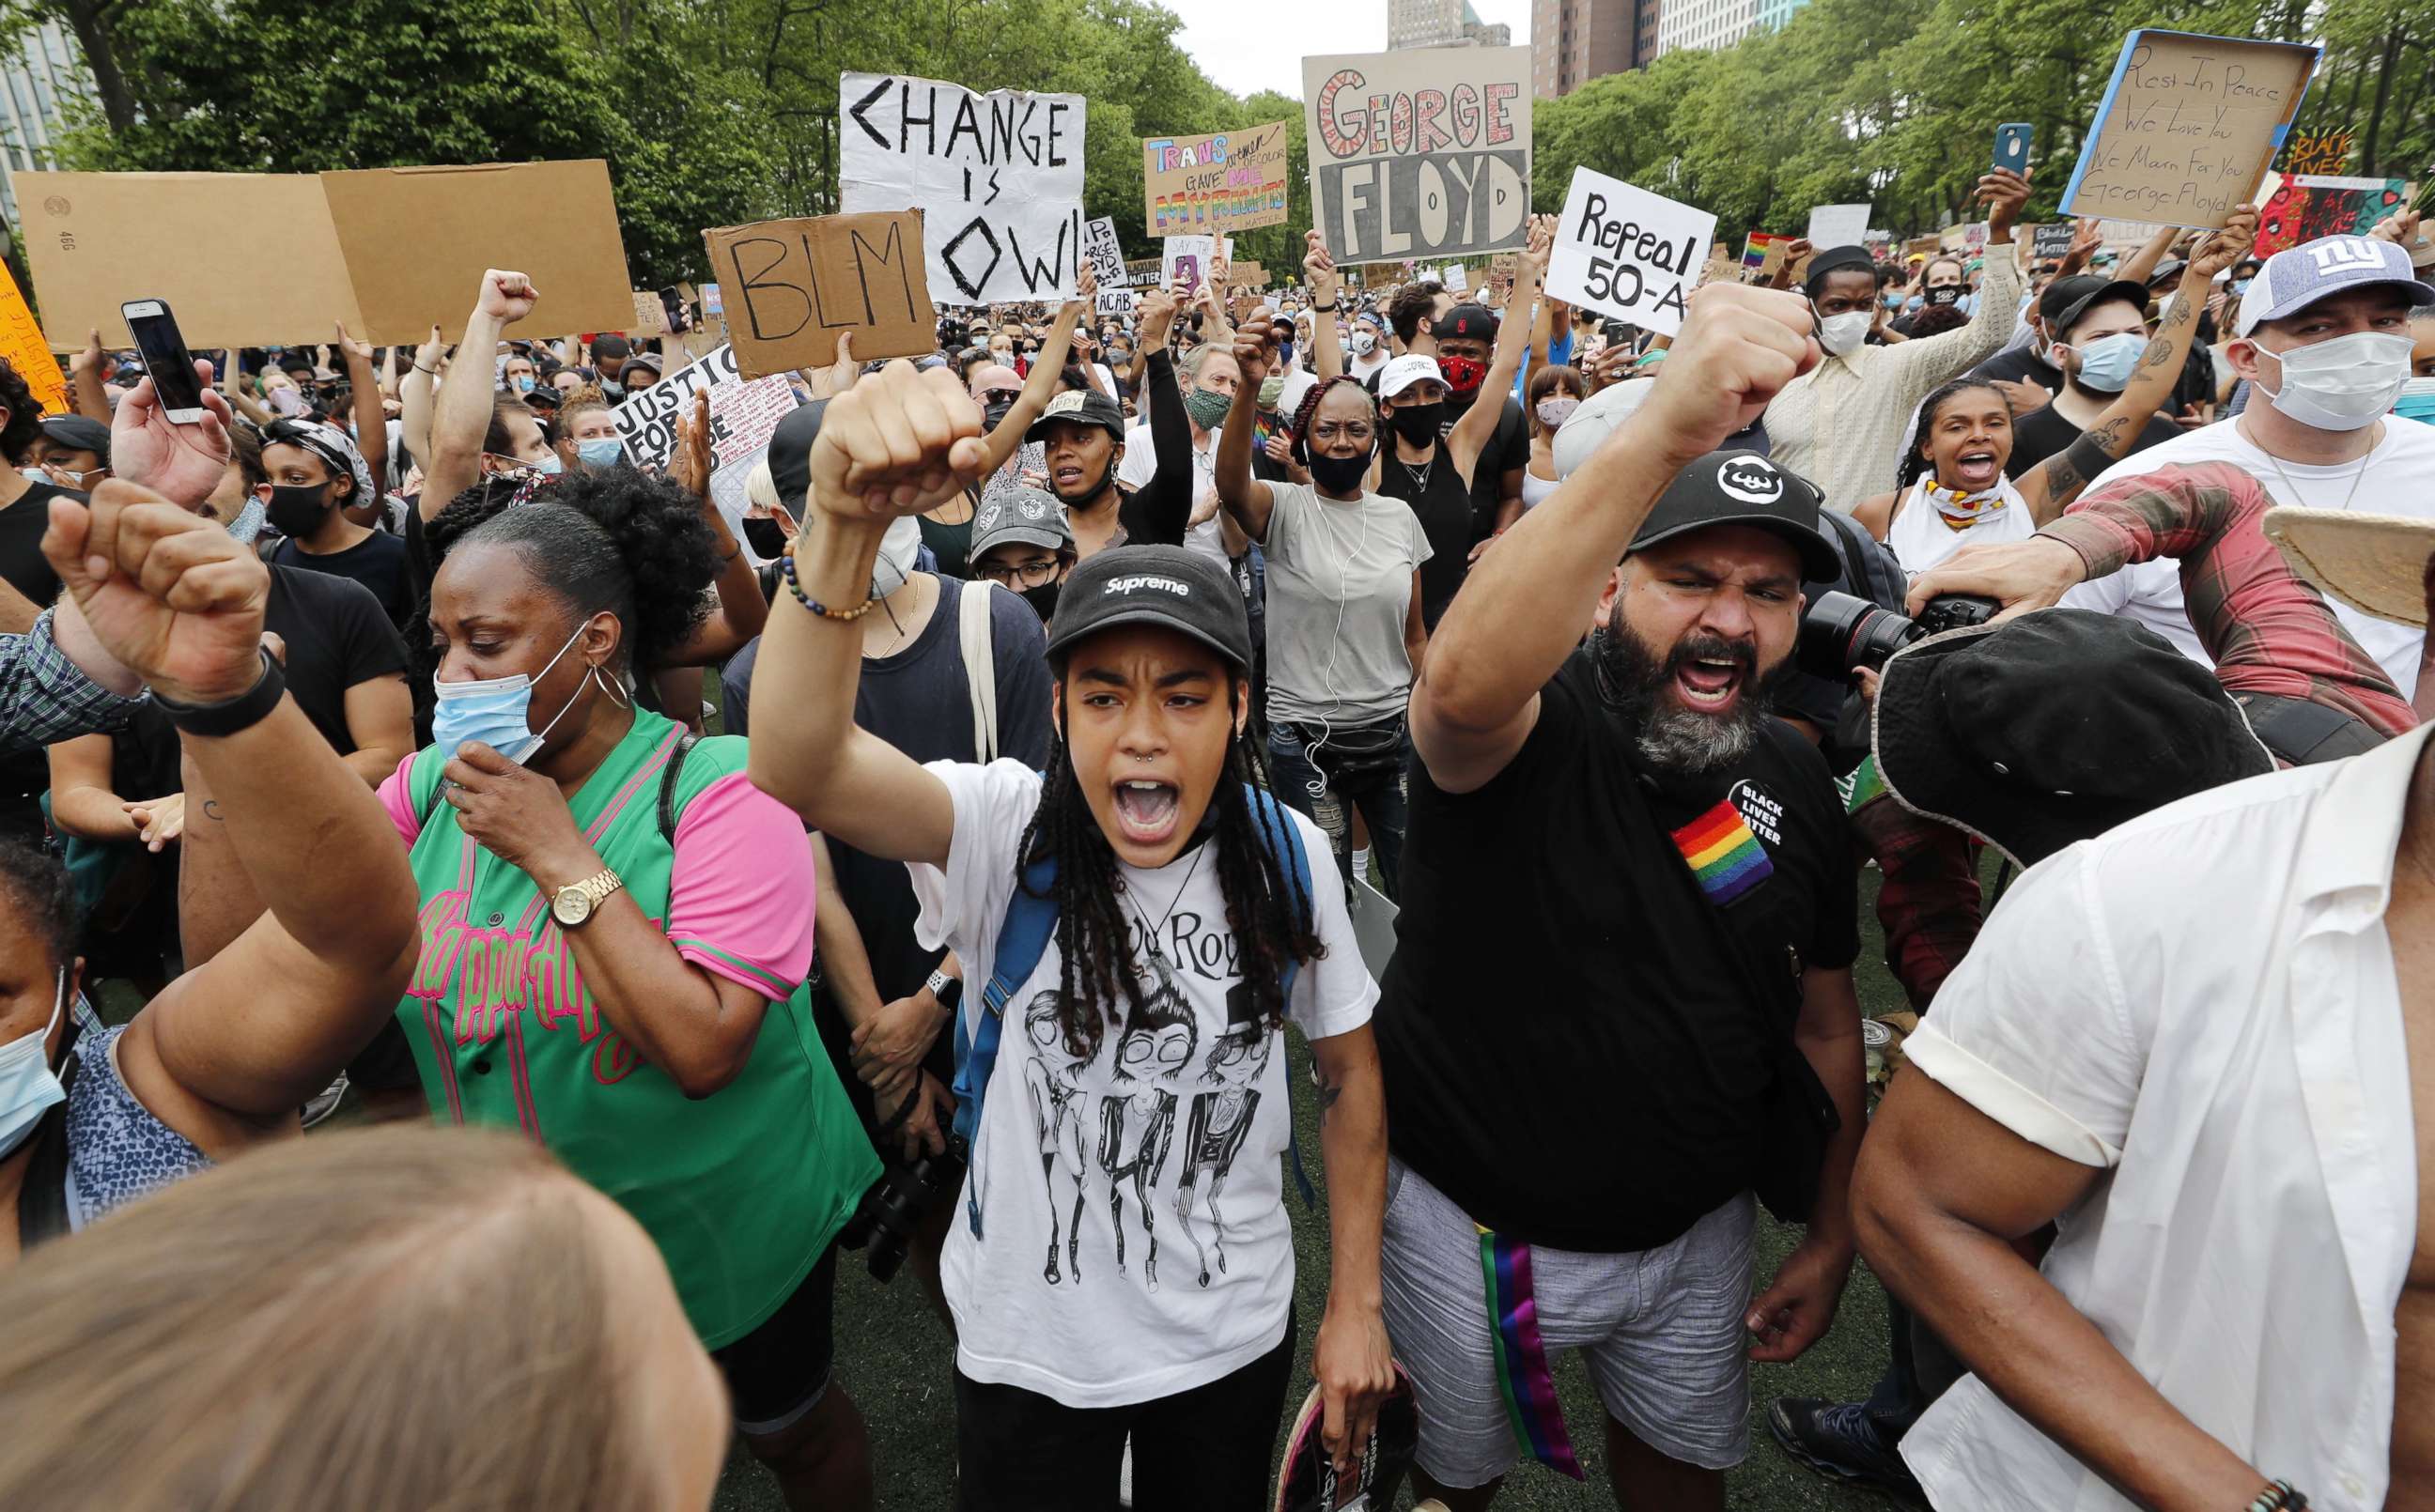 PHOTO: People rally during a George Floyd Memorial in Brooklyn, New York, June 4, 2020.